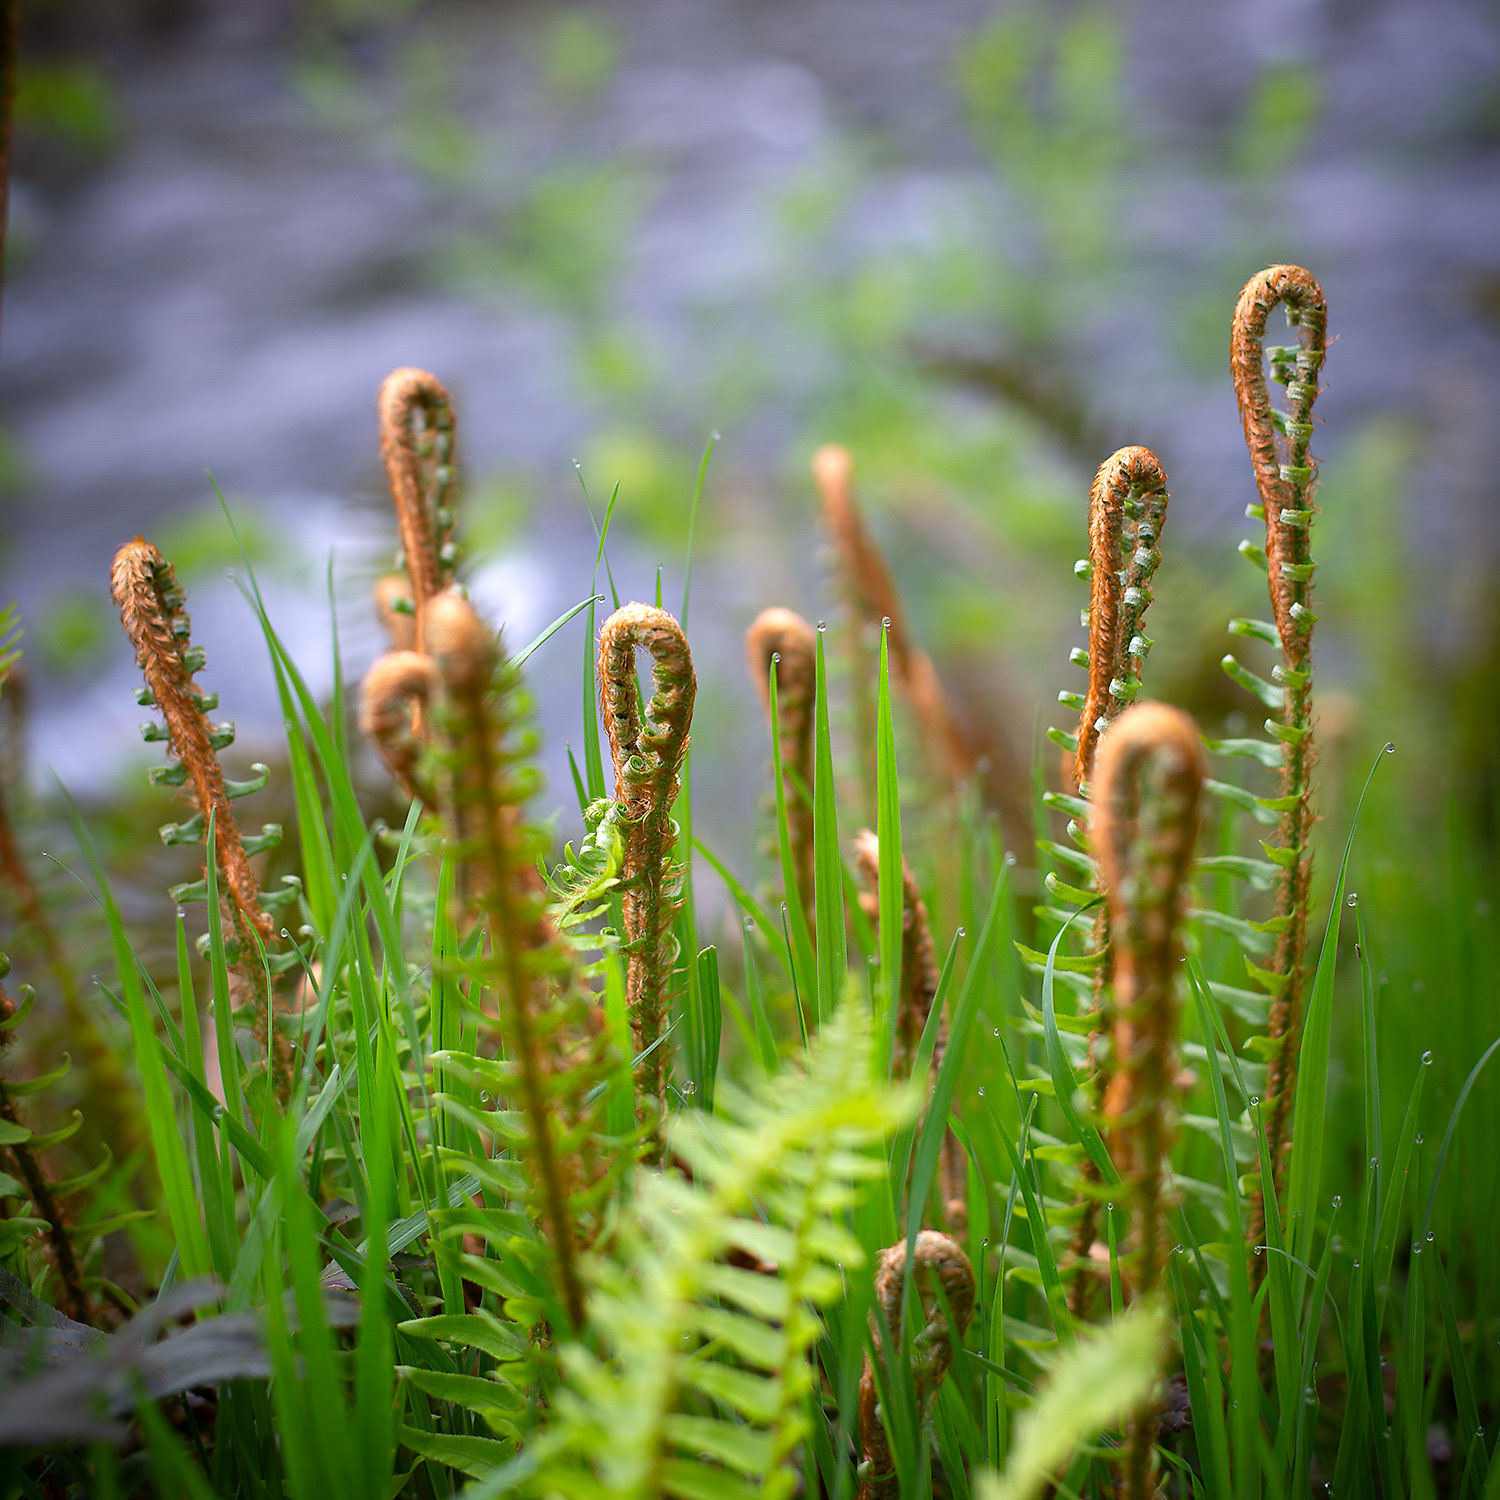 Young ferns alongside a river